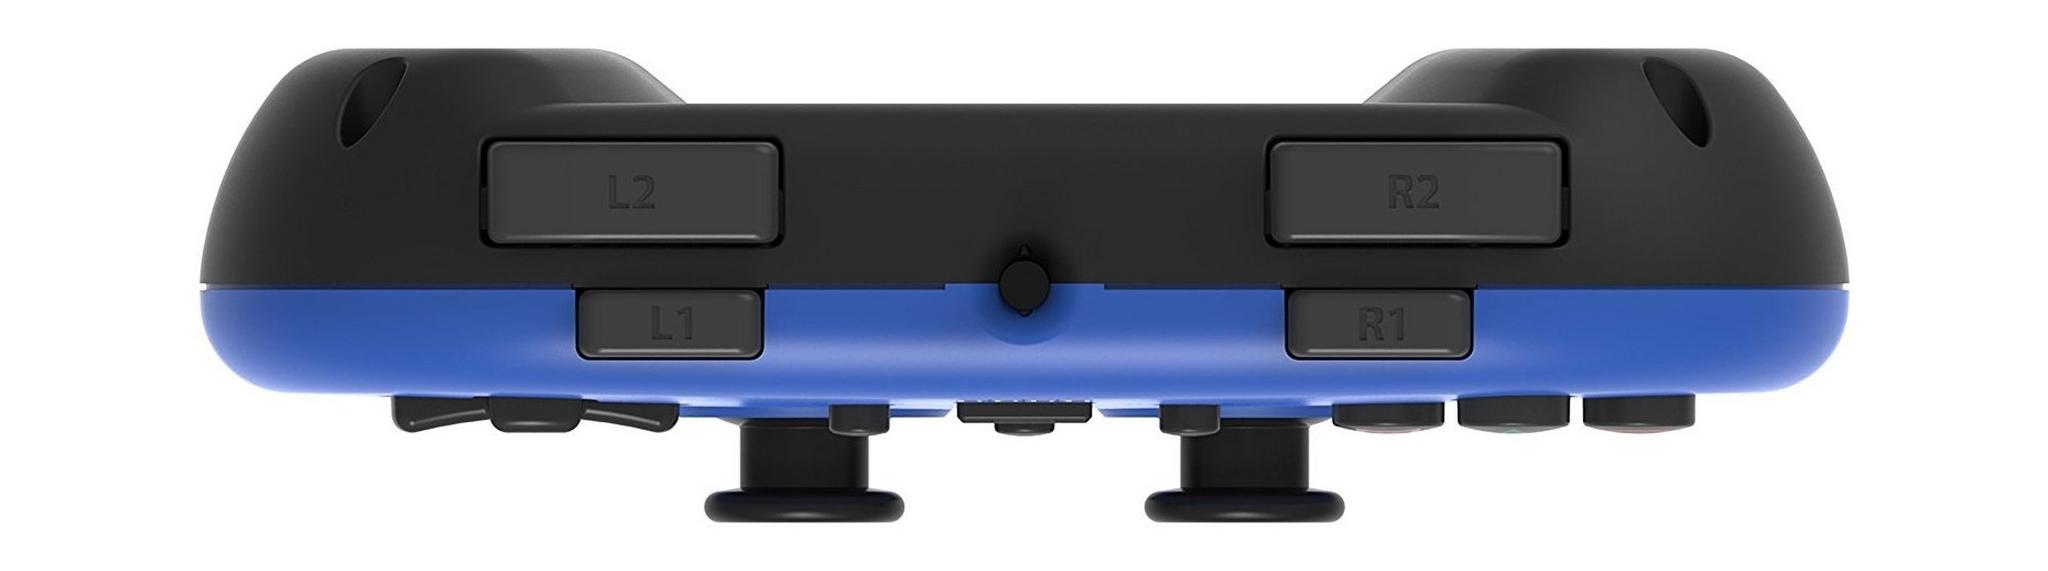 HORIPAD Wired MINI Gamepad PlayStation 4 Controller - Blue